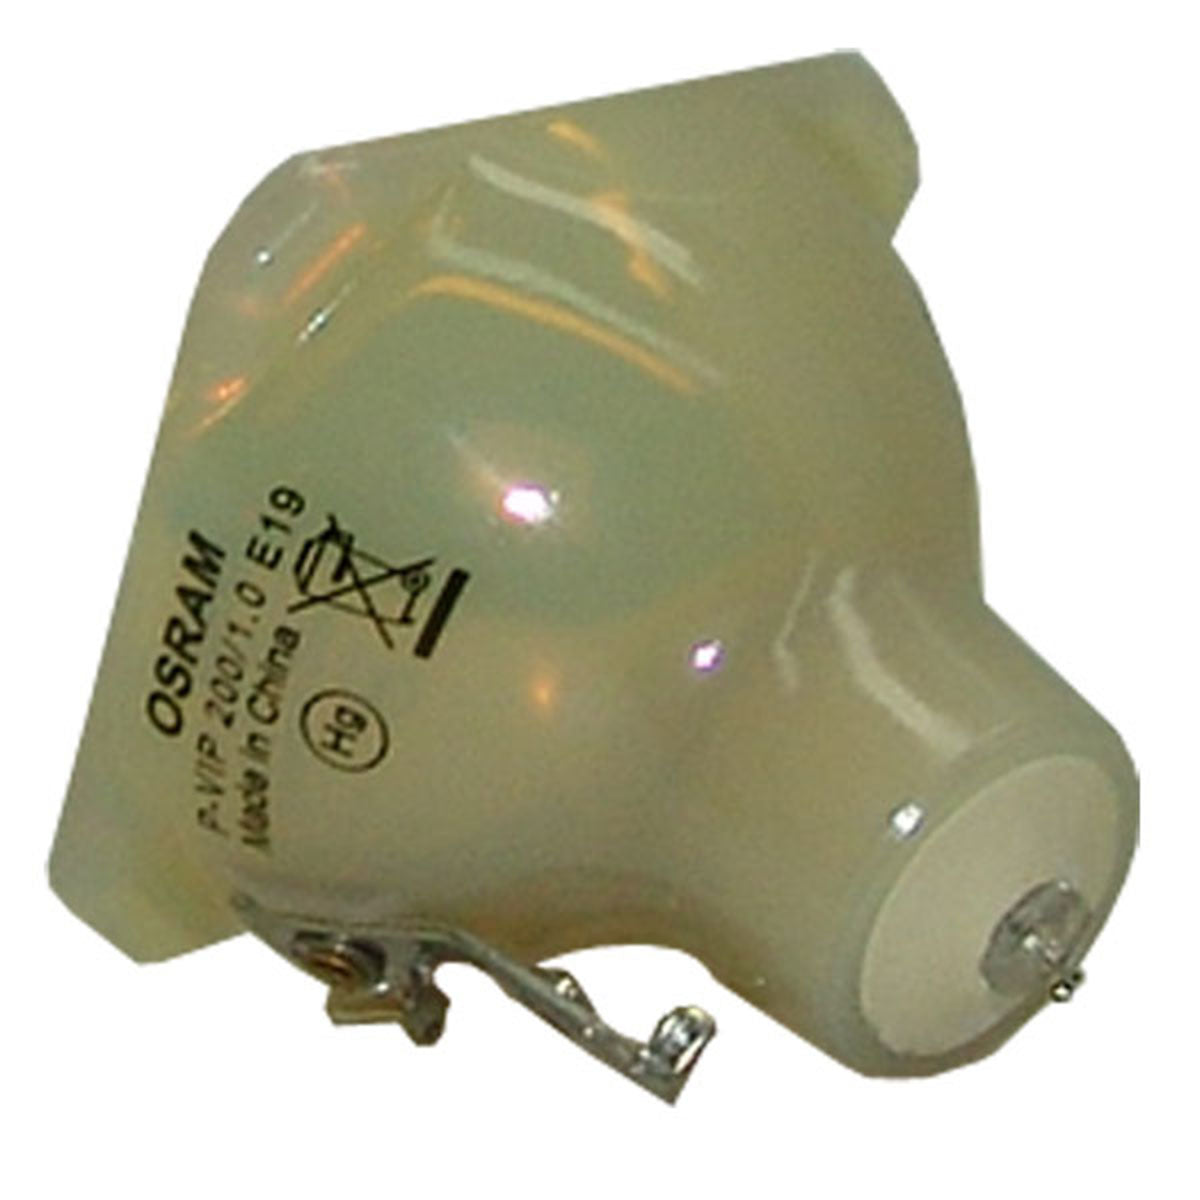 Hitachi DT01141 Osram Projector Bare Lamp